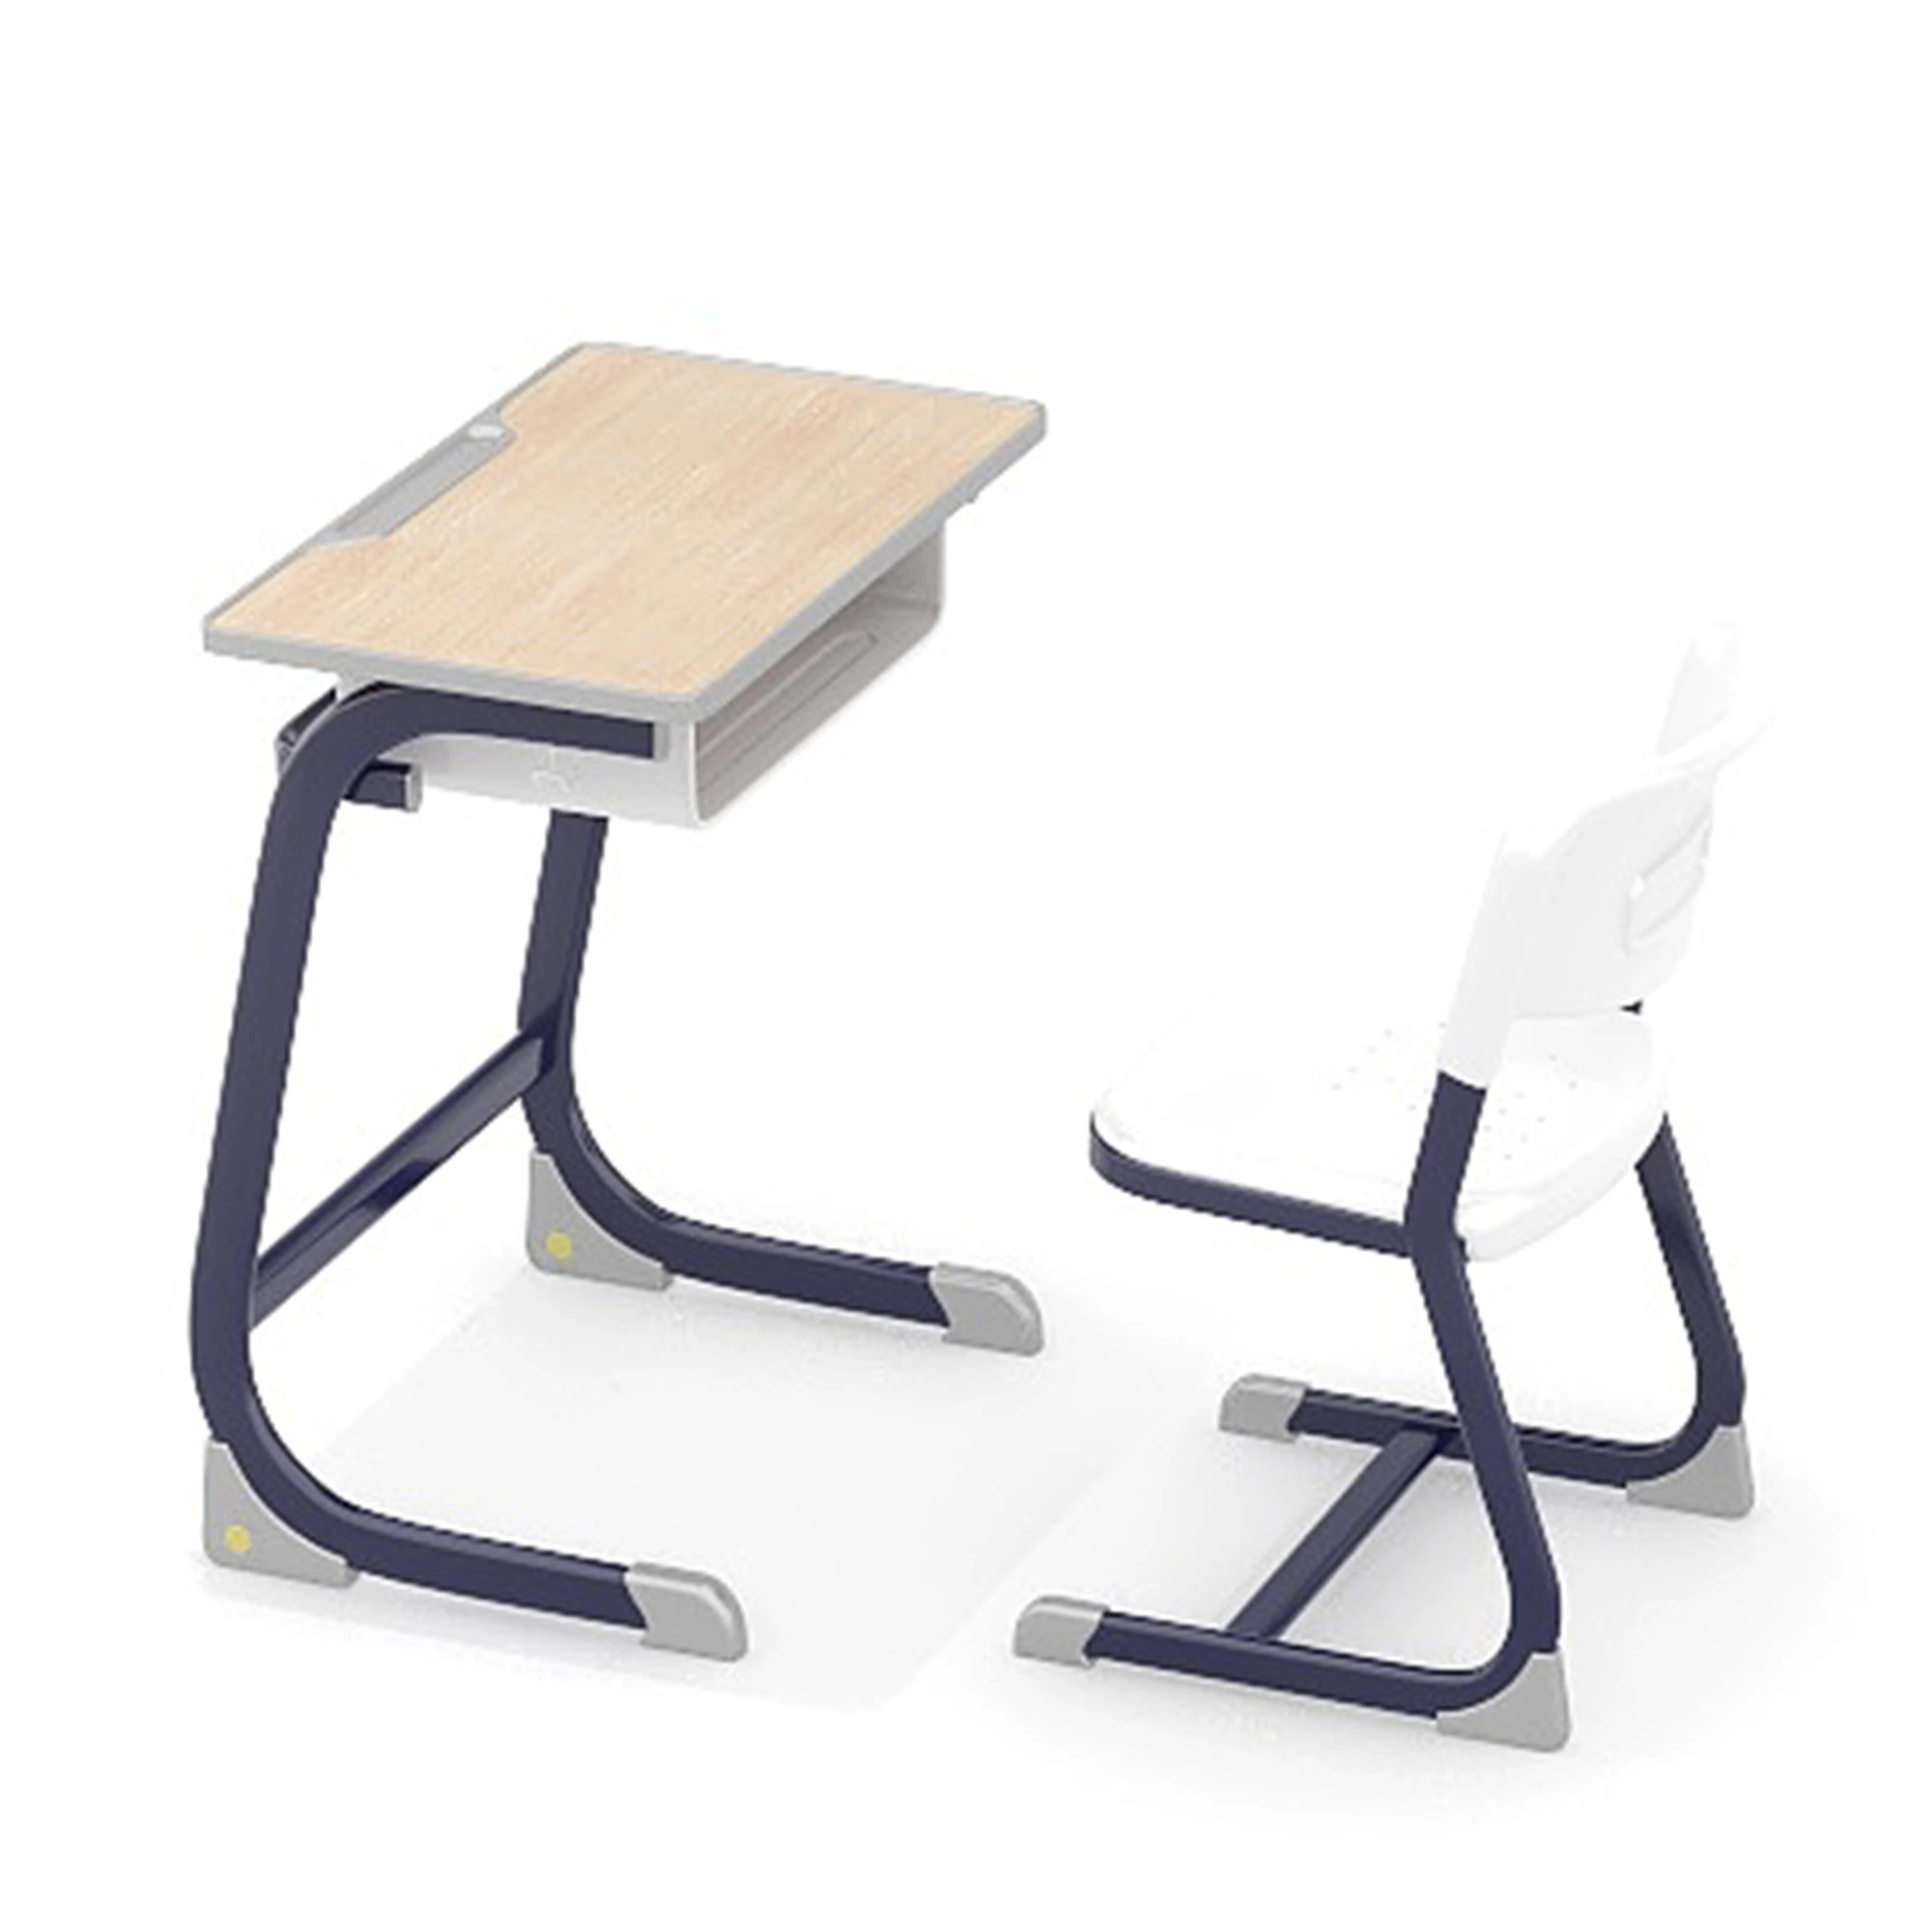 Modern School Primary High School Student School Seat University Desk Chair Set